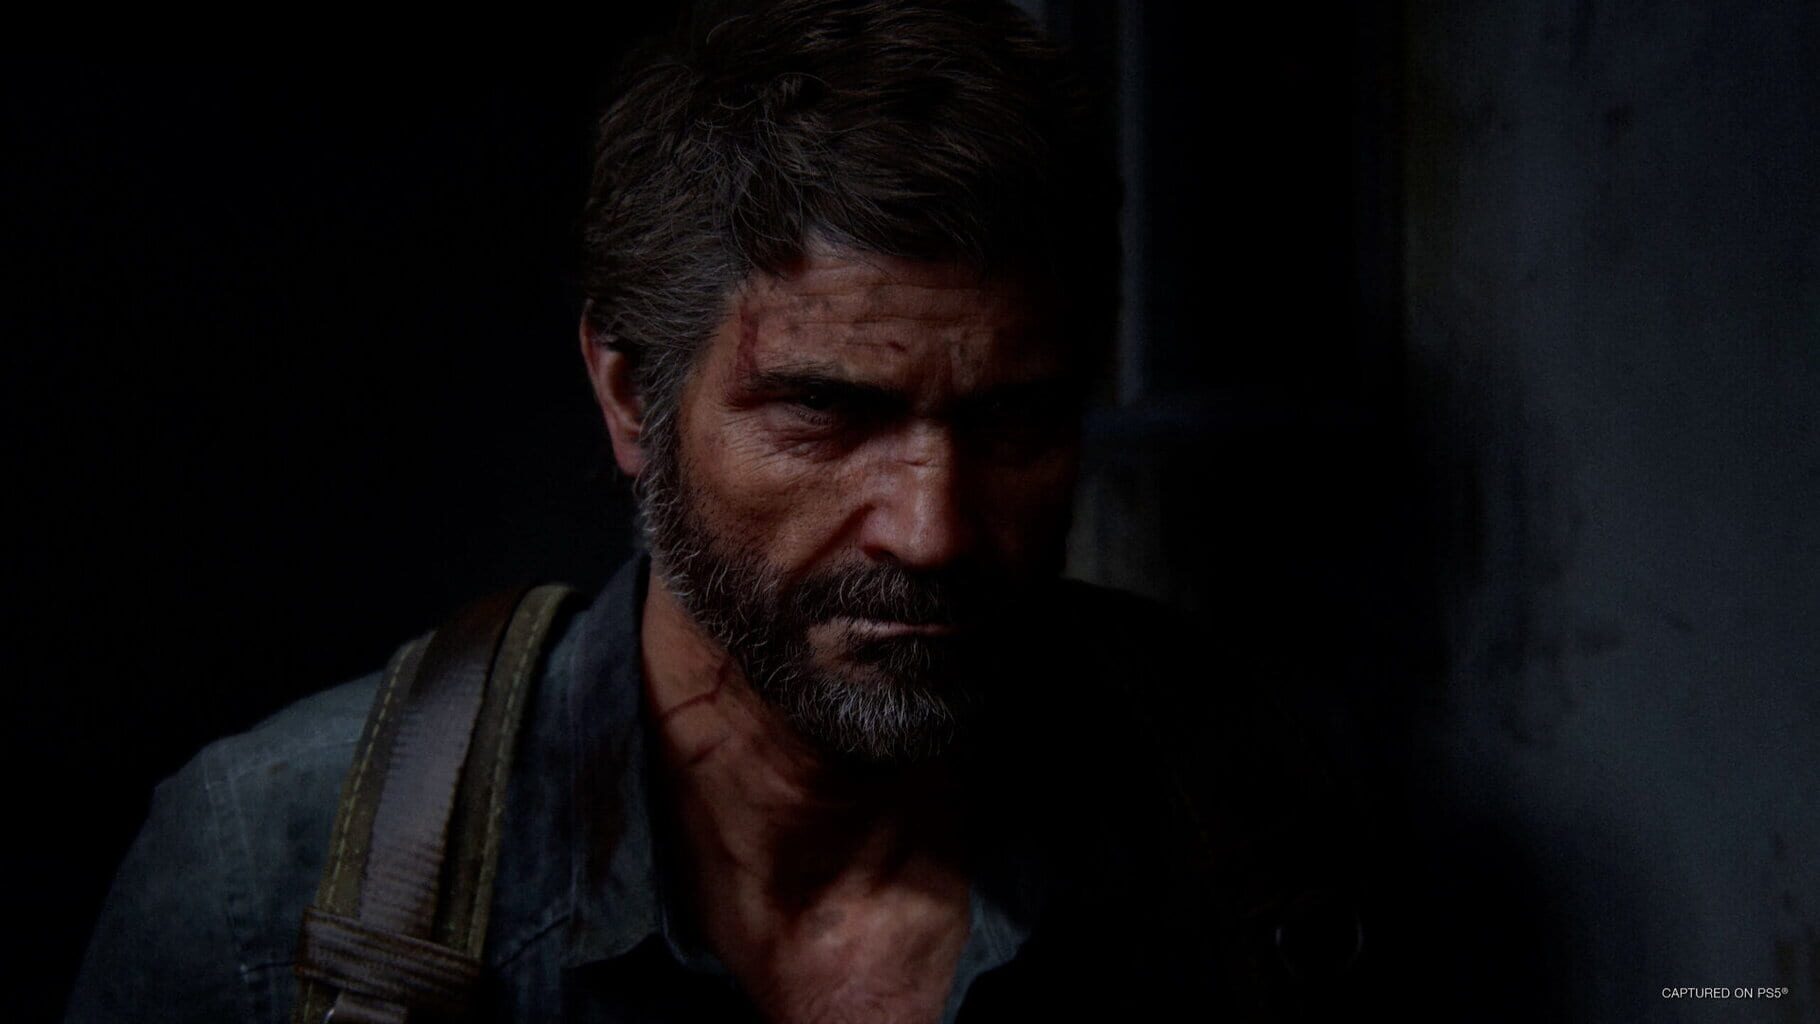 The Last of Us Part II: Remastered screenshots